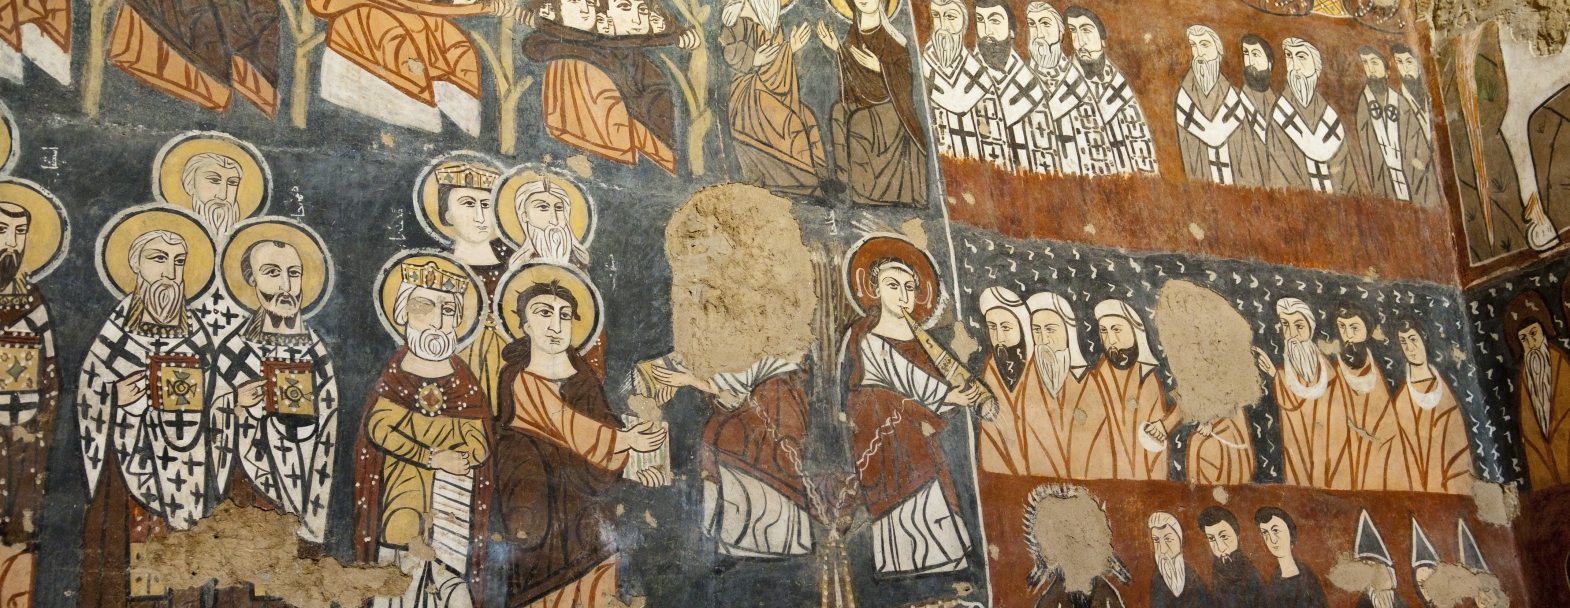 fresque du monastère de Deir Mar Musa en Syrie © Istock / J.Carillet